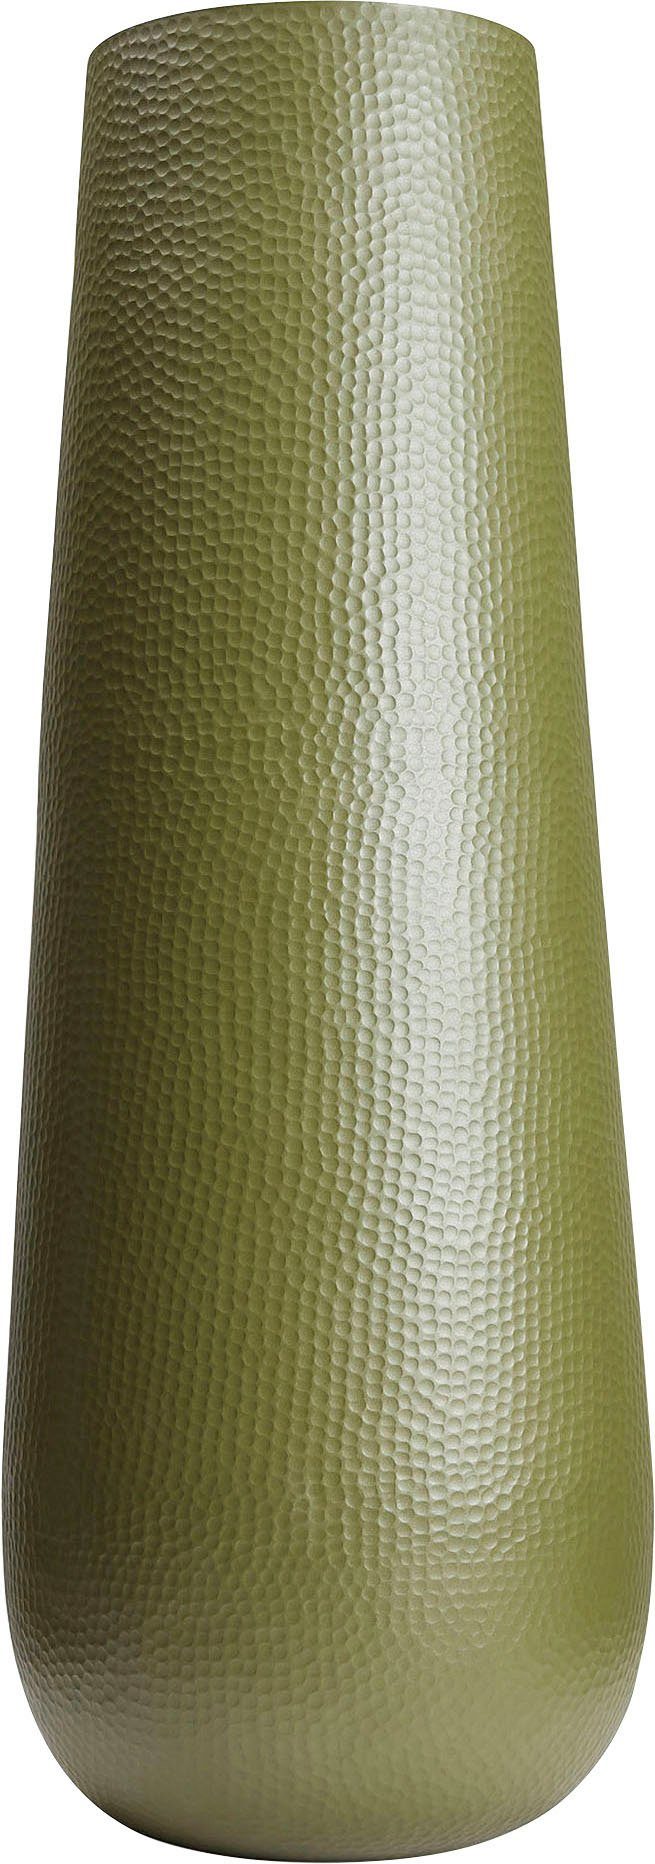 Best Bodenvase Lugo, ØxH: 42x120 cm waldgrün